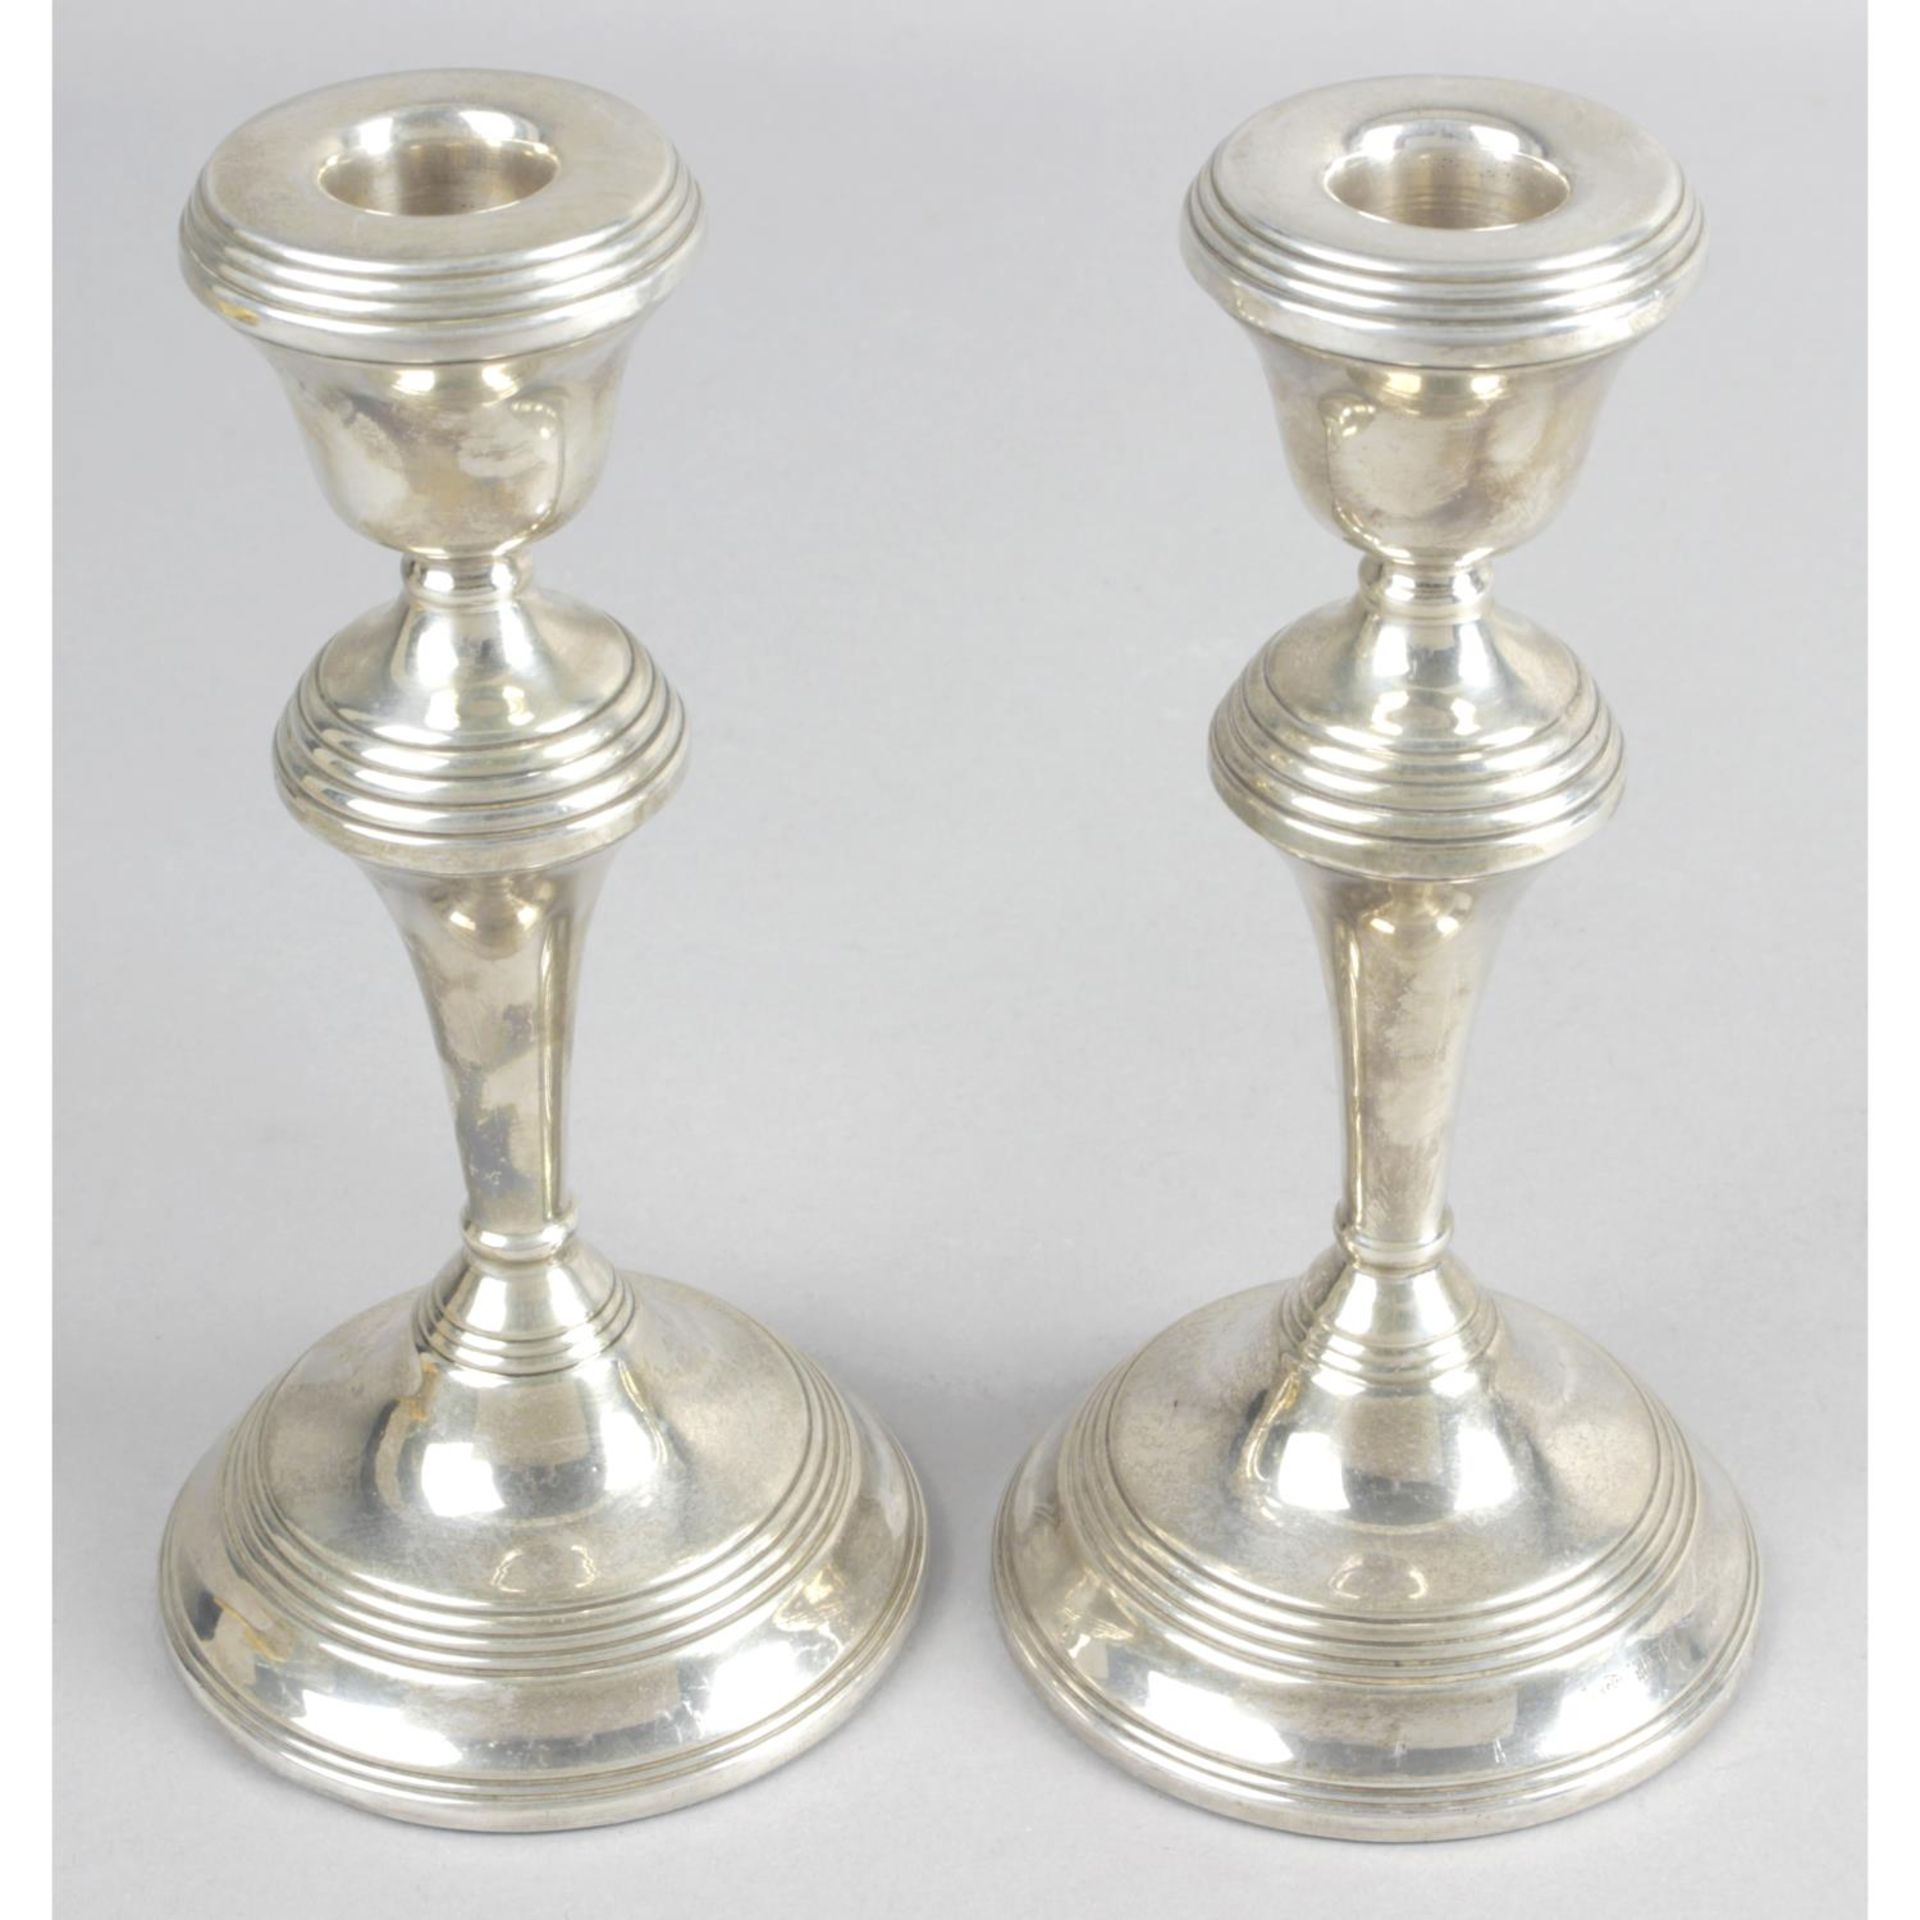 A pair of modern matched silver candlesticks,